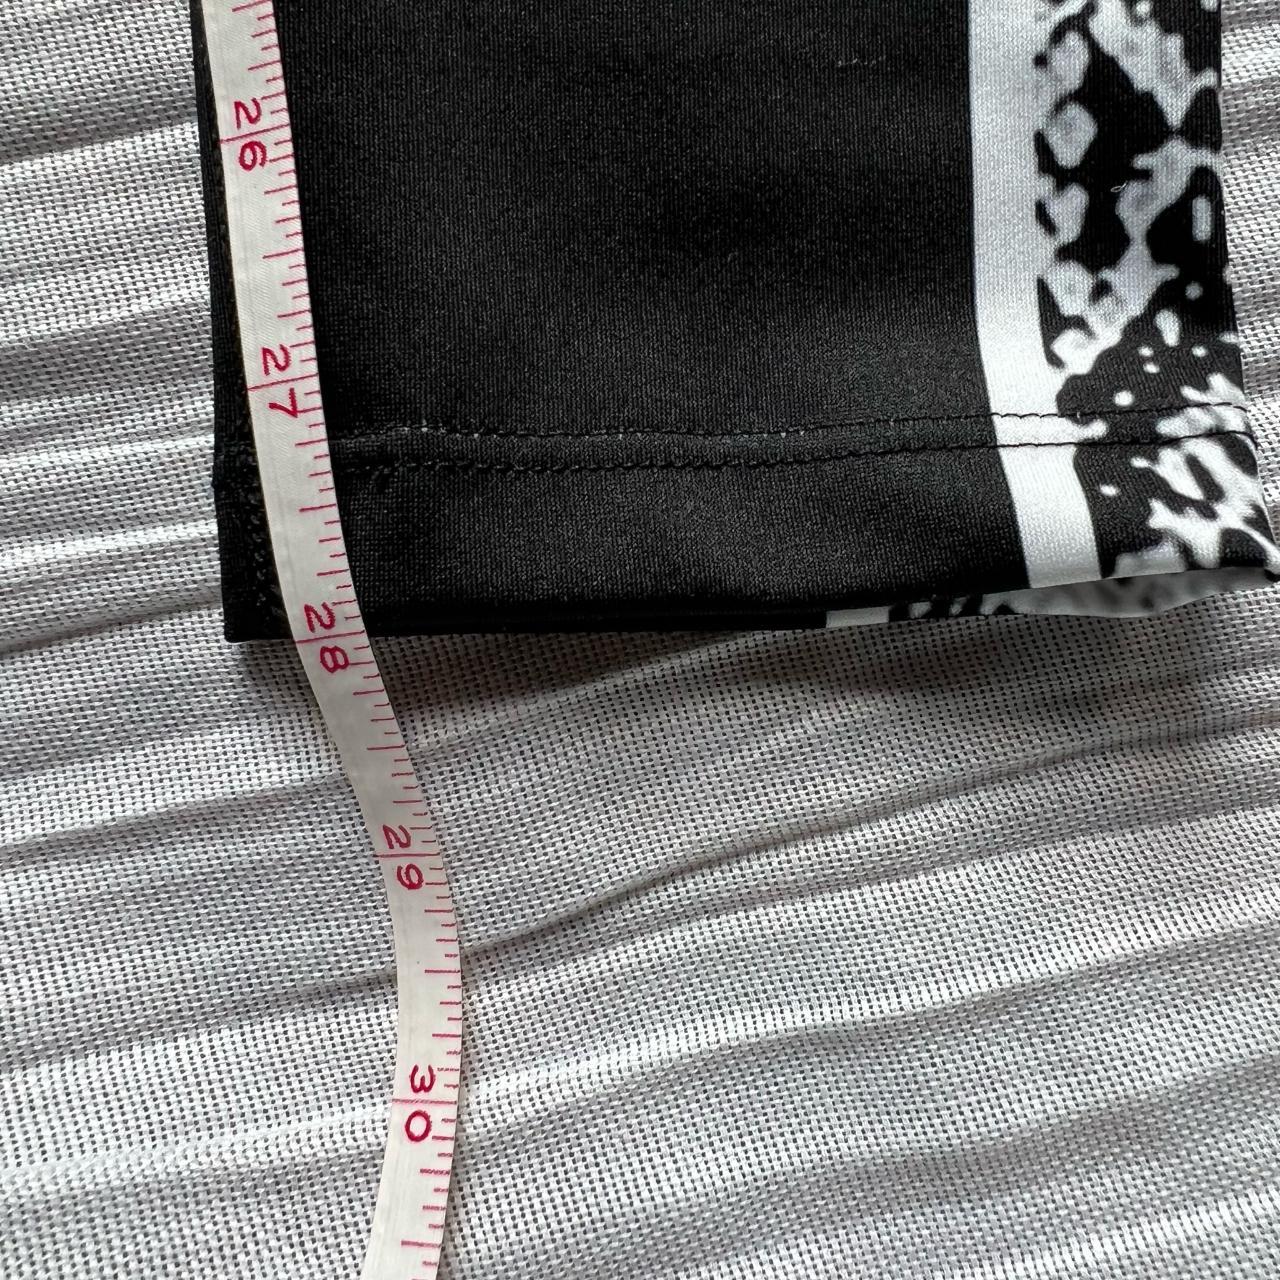 jsm fabrics enterprise in Delhi - Retailer of trousers gripper tape &  Pocketing Cloth